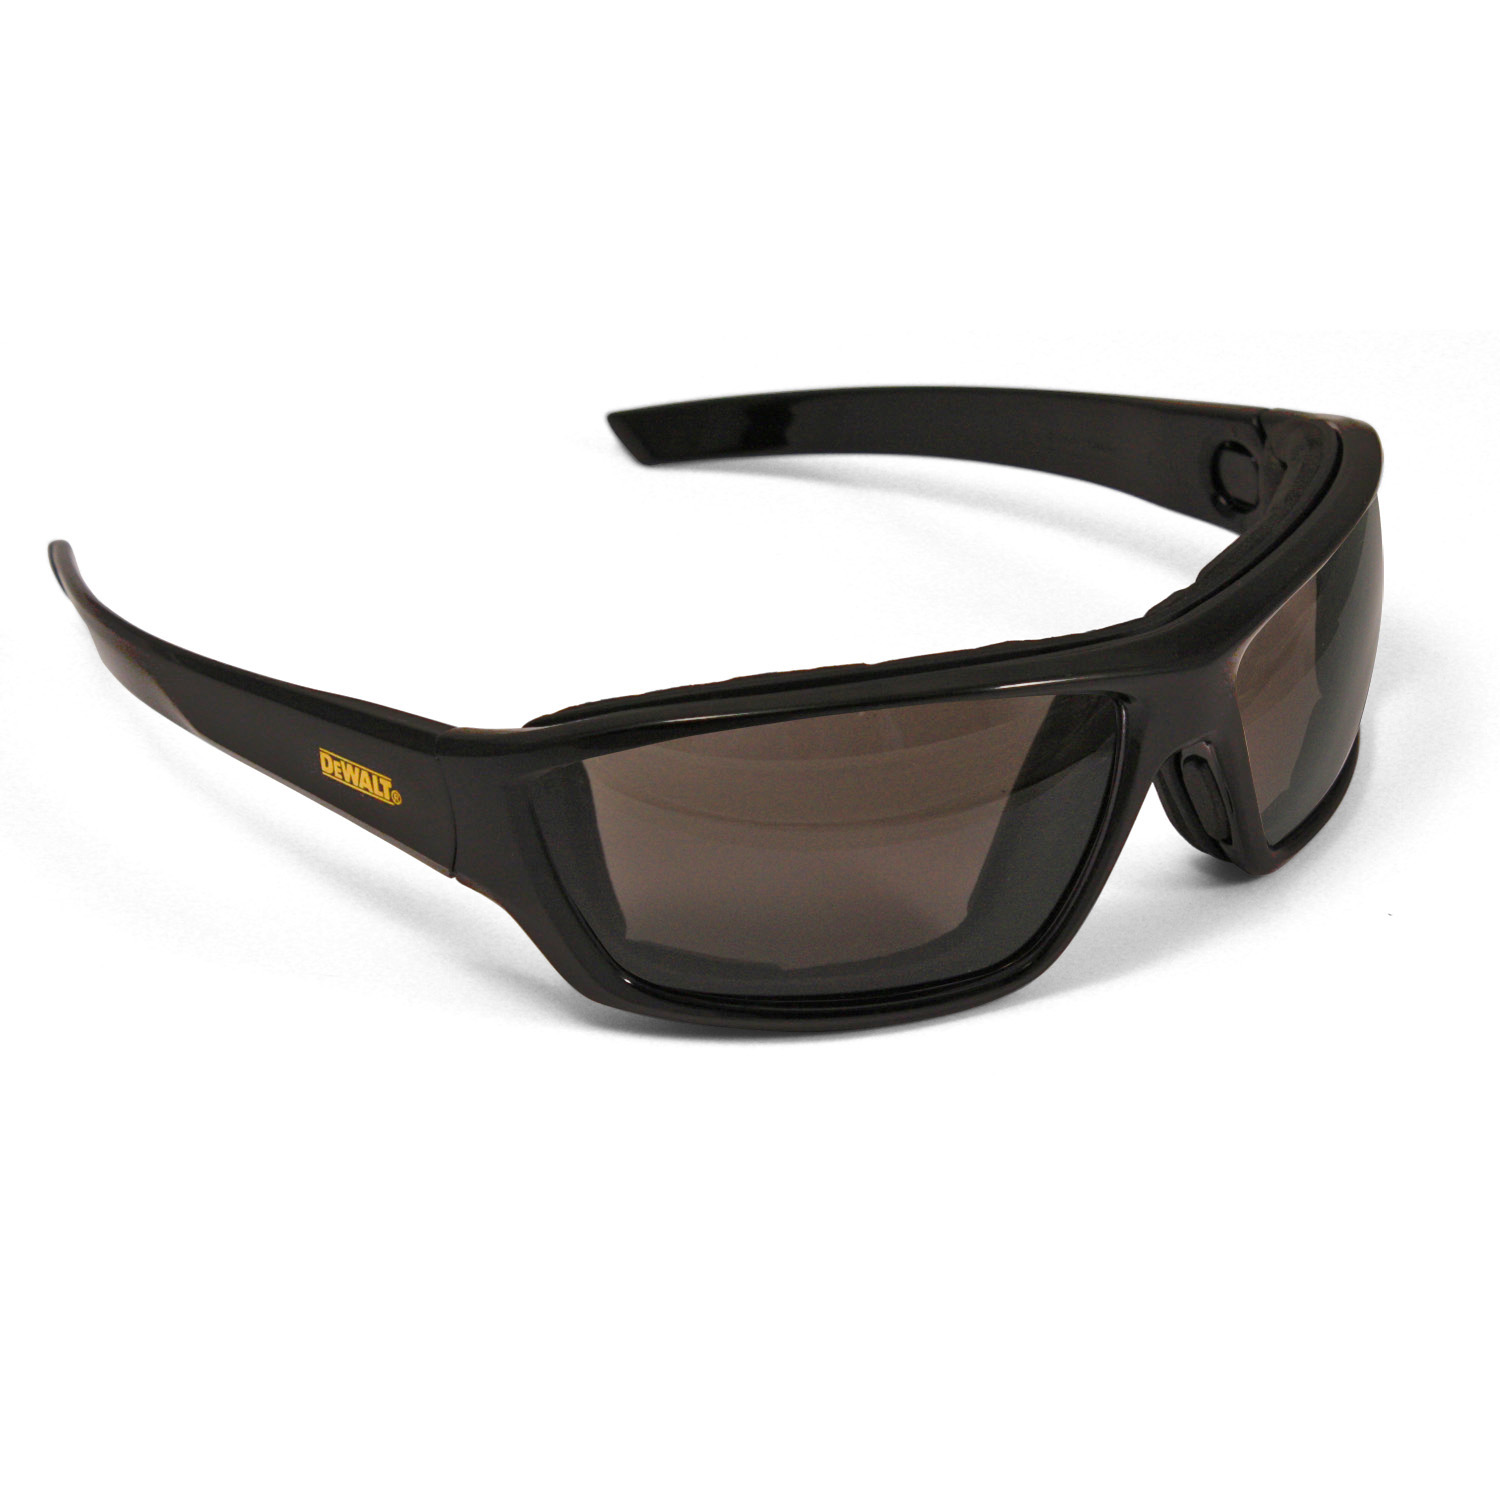 DPG83 Converter™ Safety Glass/Goggle Hybrid - Black Frame - Smoke Anti-Fog Lens